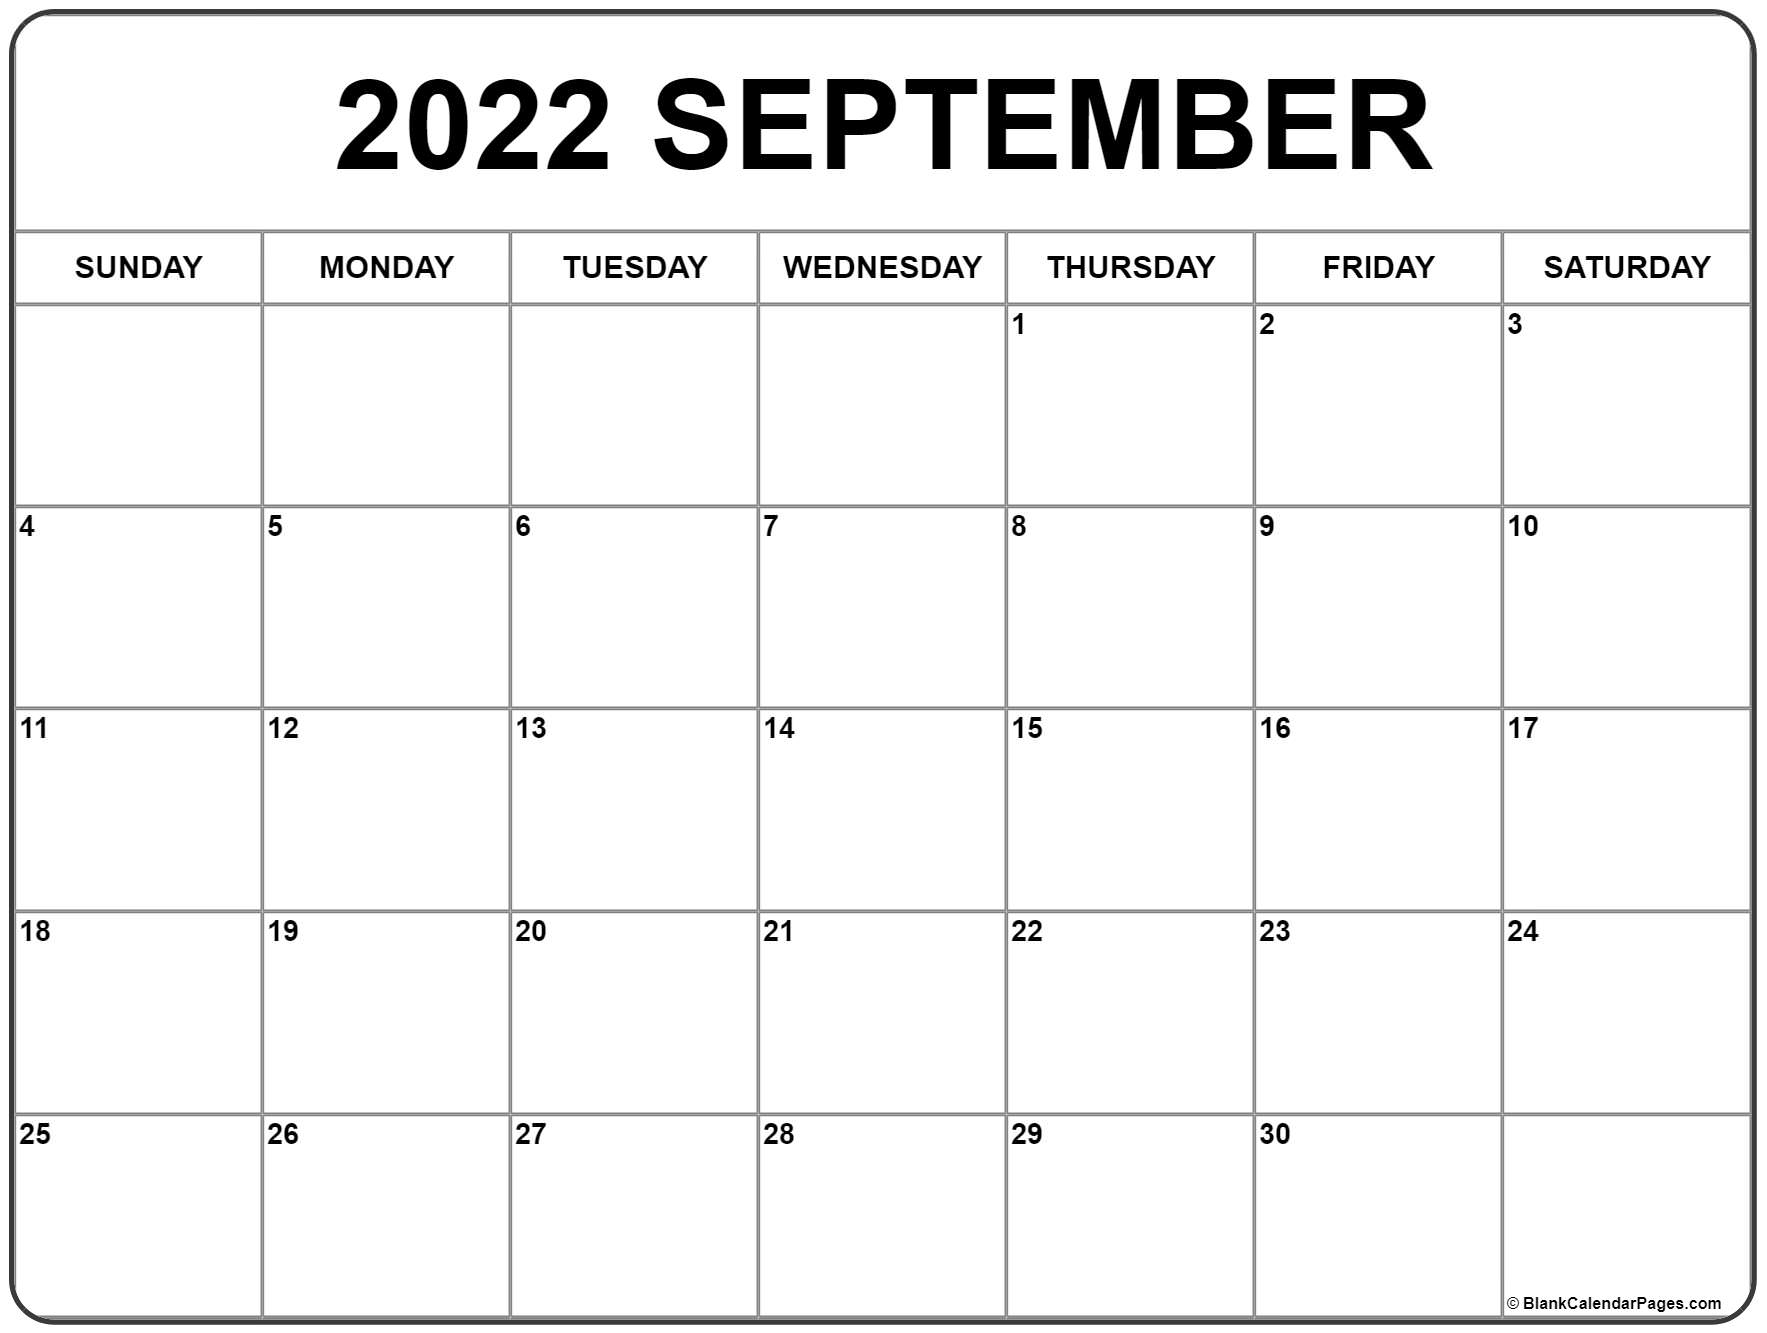 September 2022 Calendar | Free Printable Calendar Templates within Calendar September 2022 To August 2022